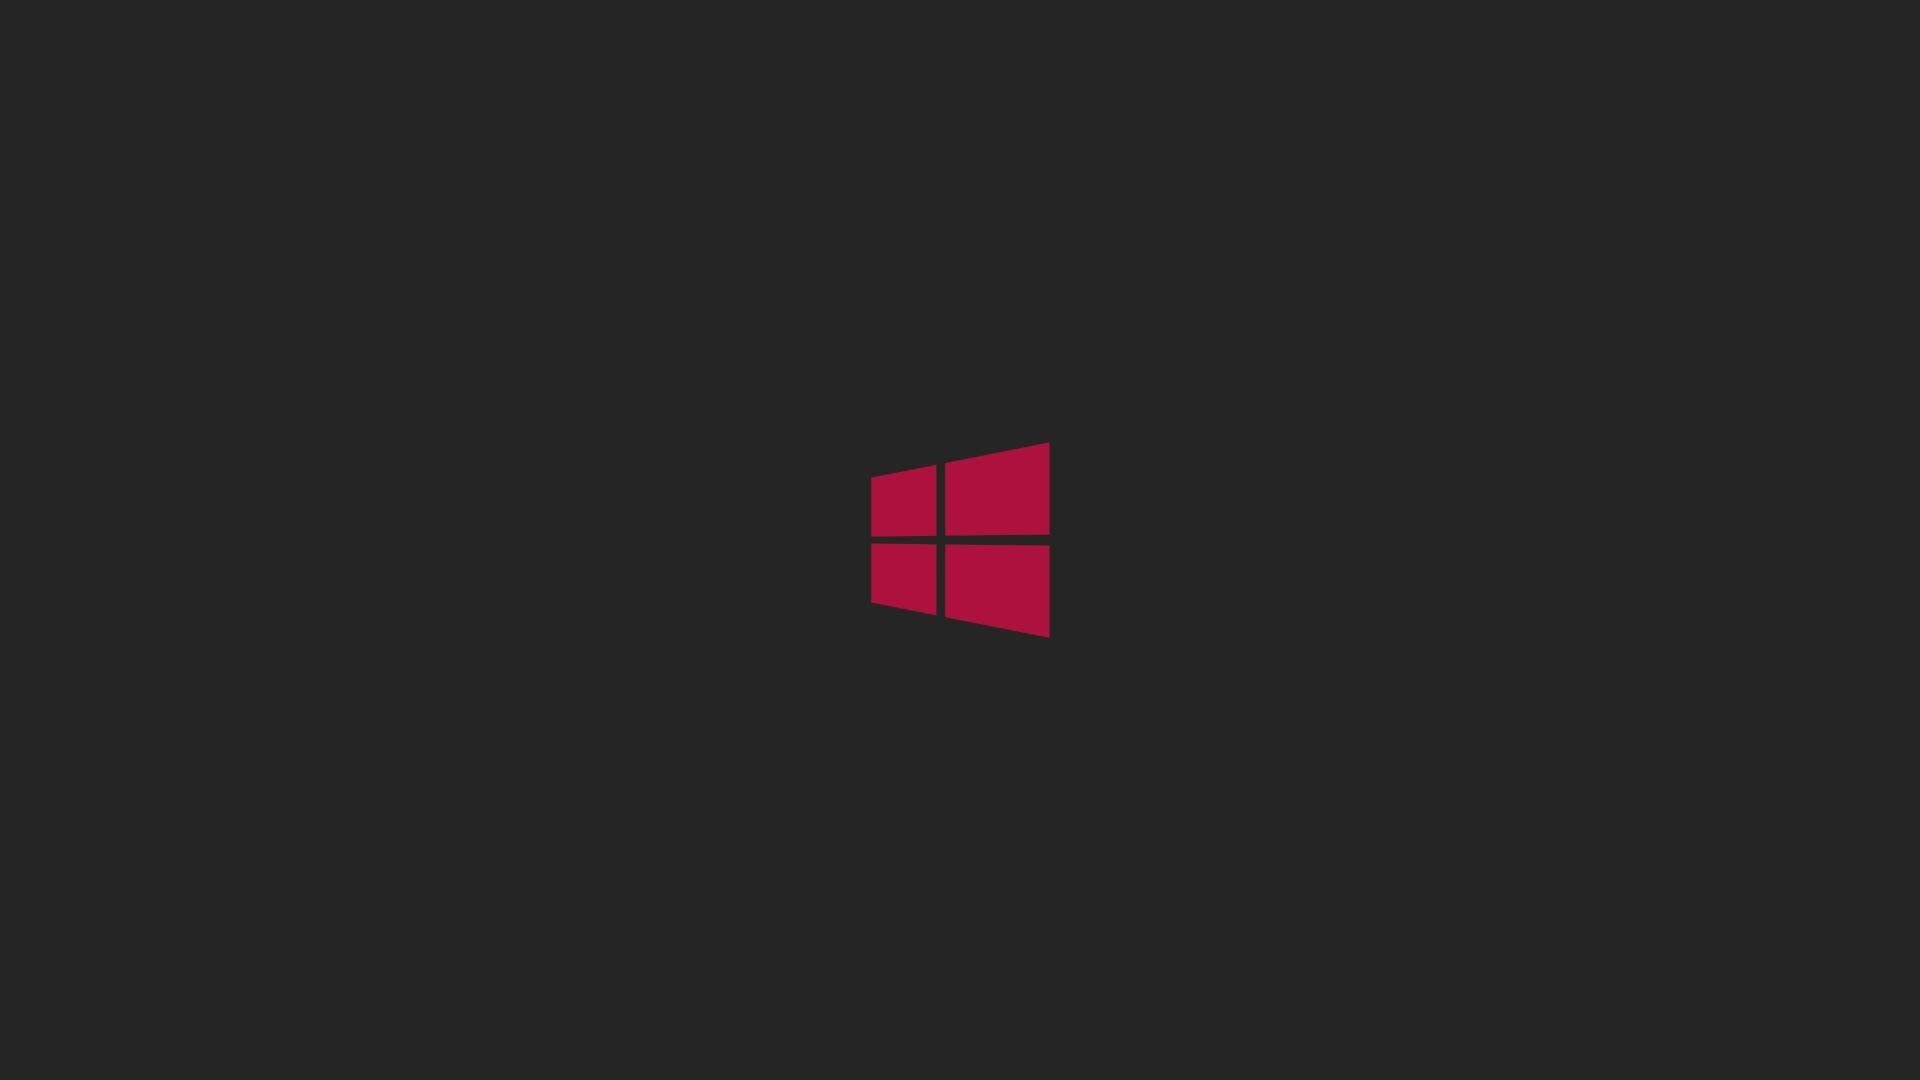 1920x1080 Latest microsoft windows logo wallpaper in gray and red paperpull jpg   New microsoft logo wallpaper